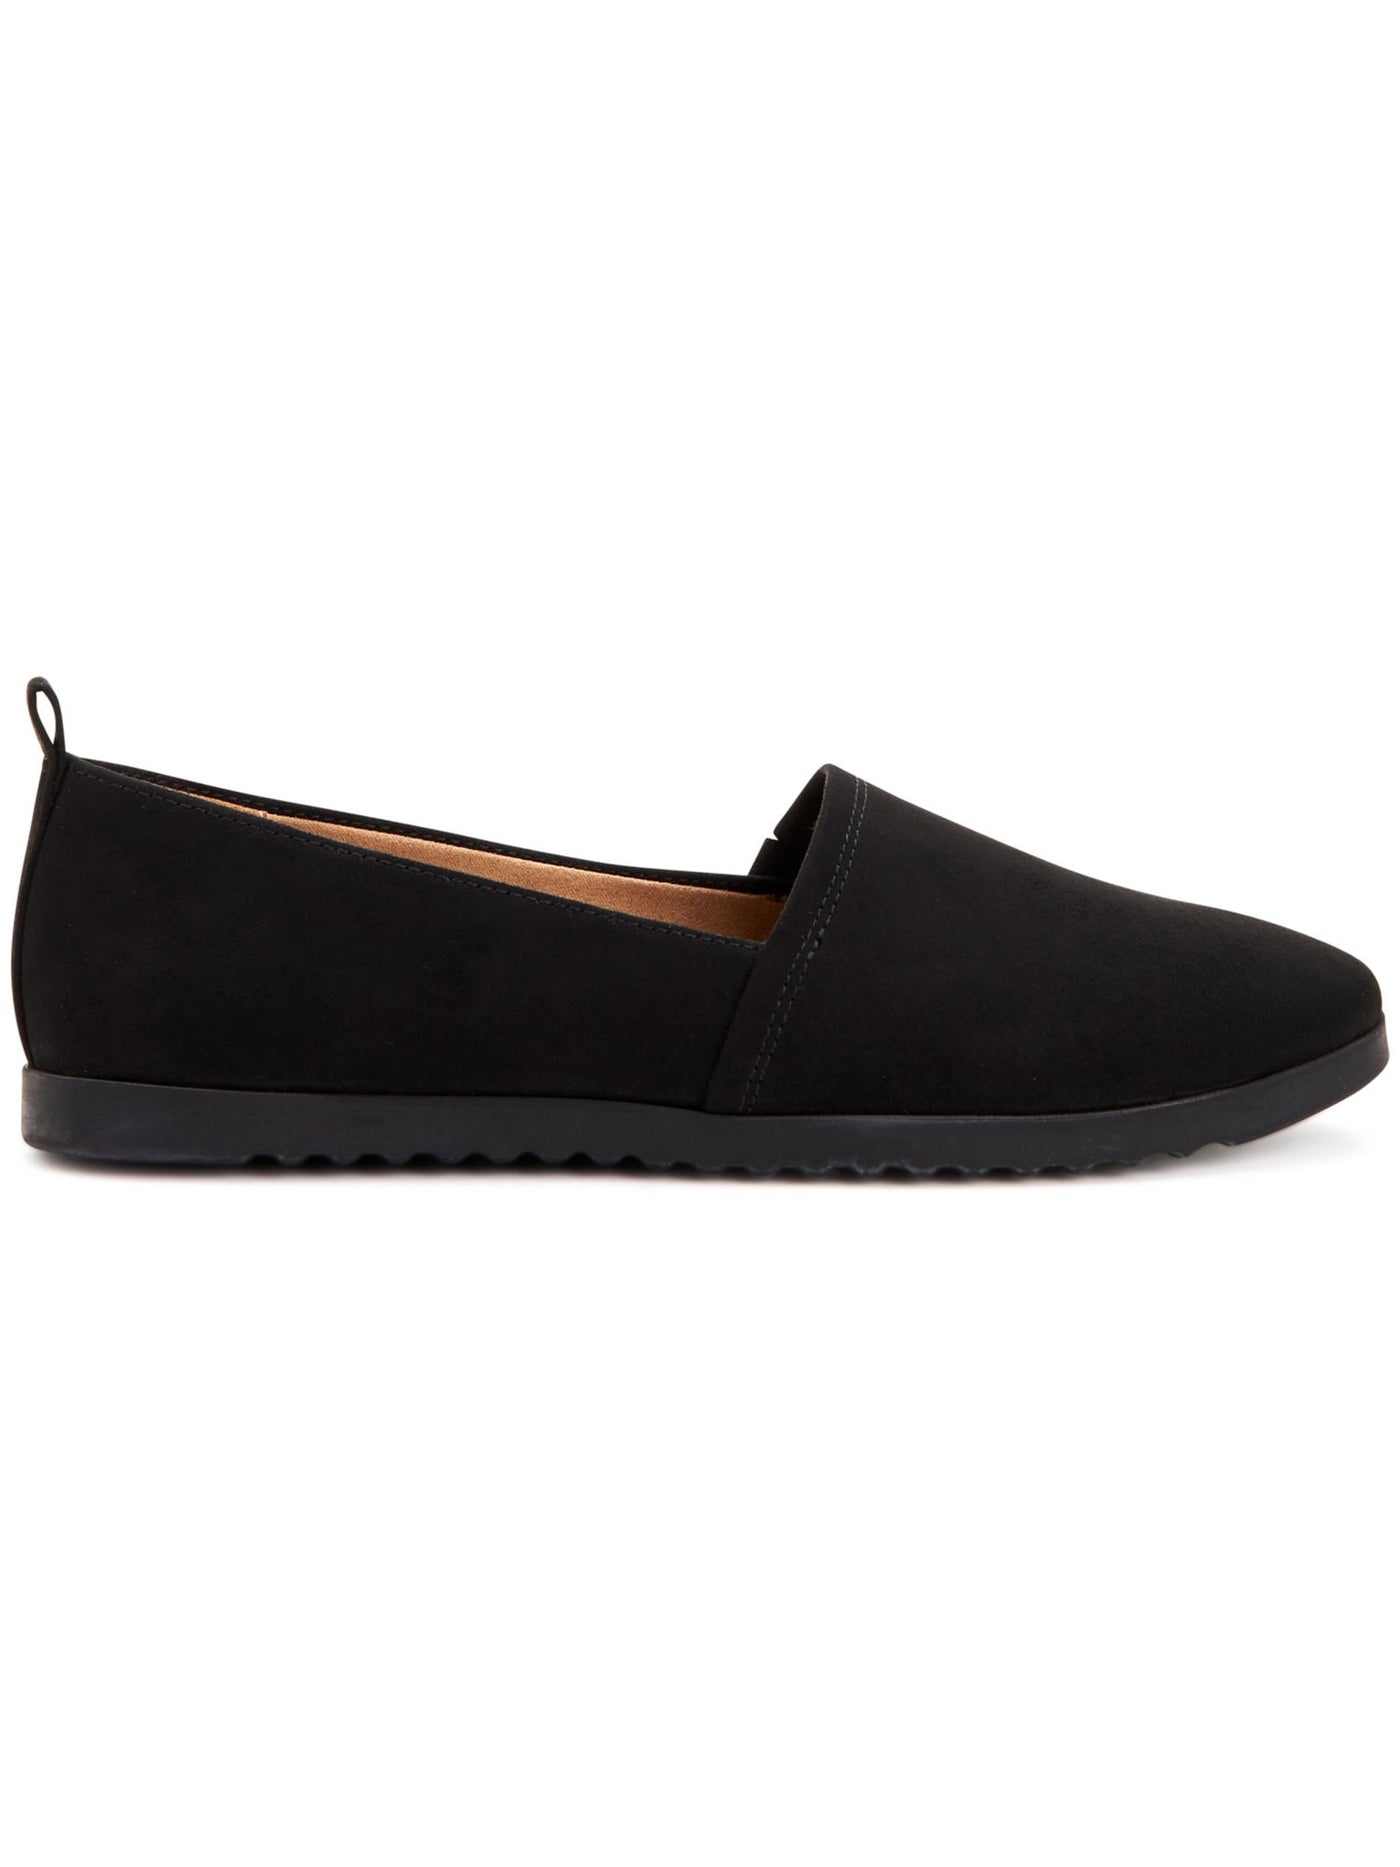 STYLE & COMPANY Womens Black Goring Padded Noura Round Toe Slip On Flats Shoes 7 M